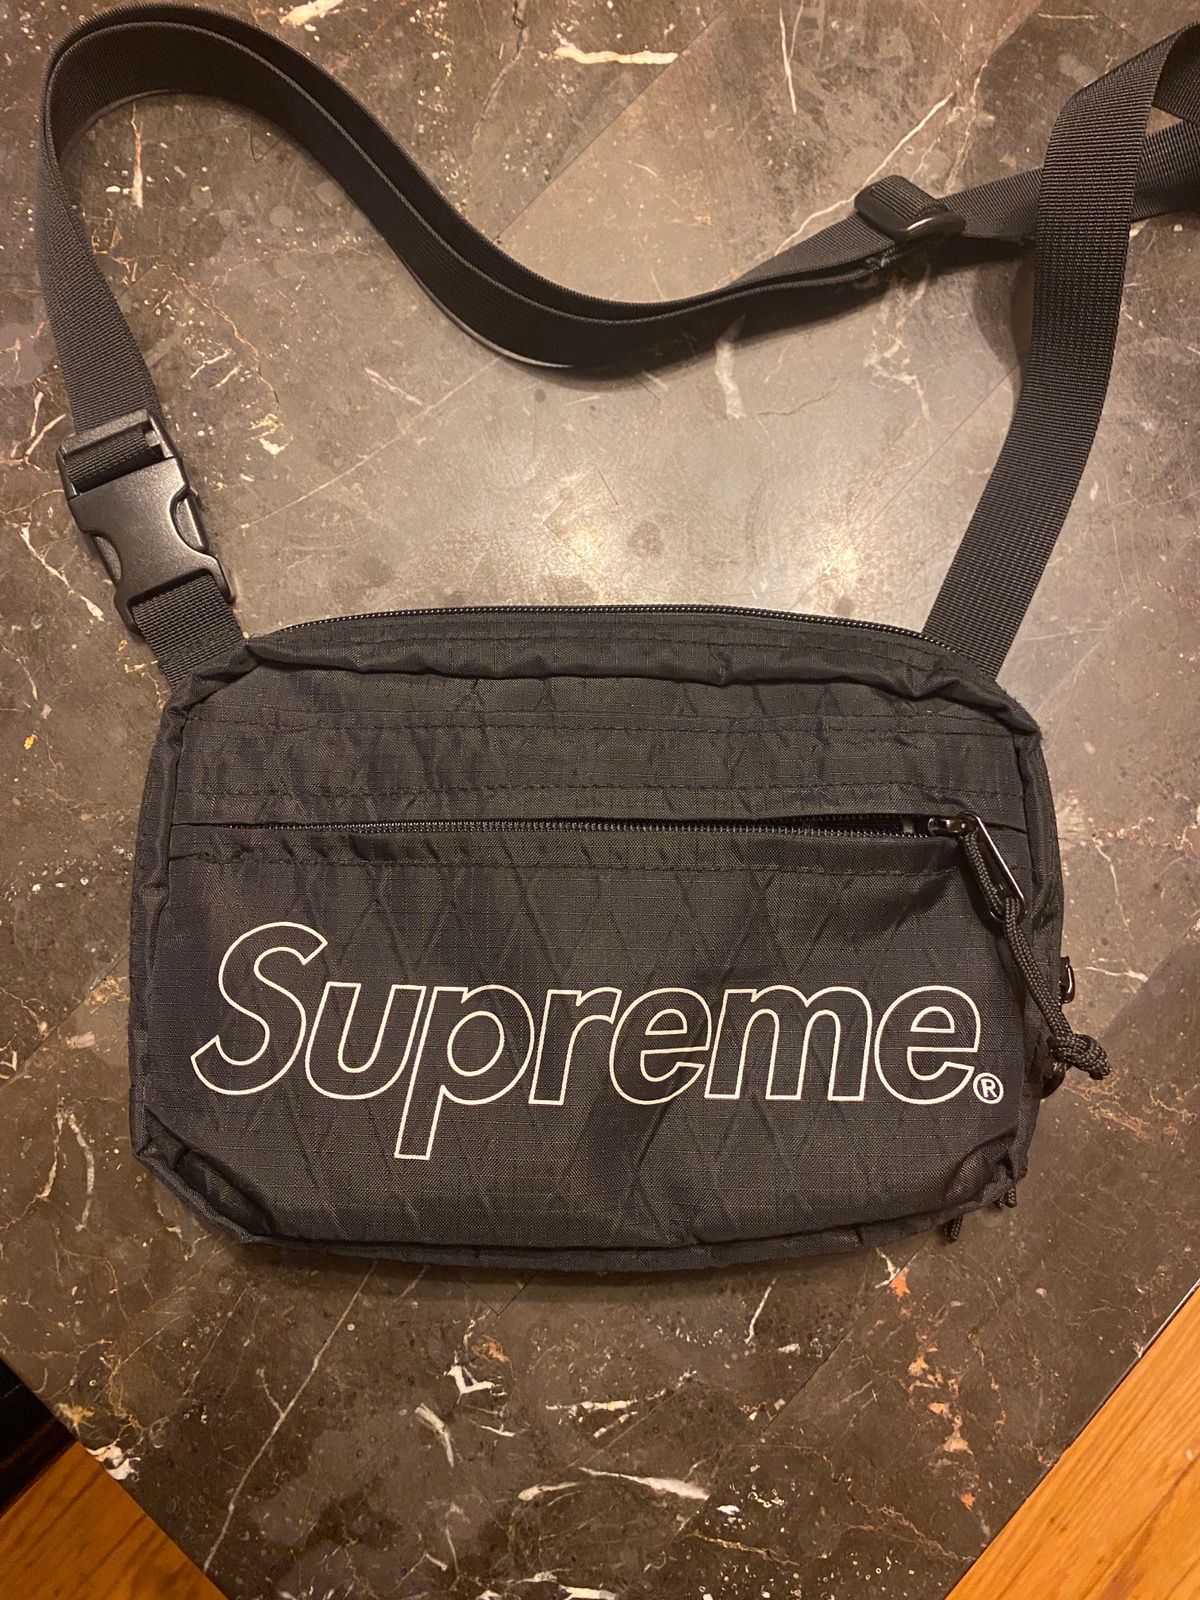 Supreme Backpack FW18 Black Reflective